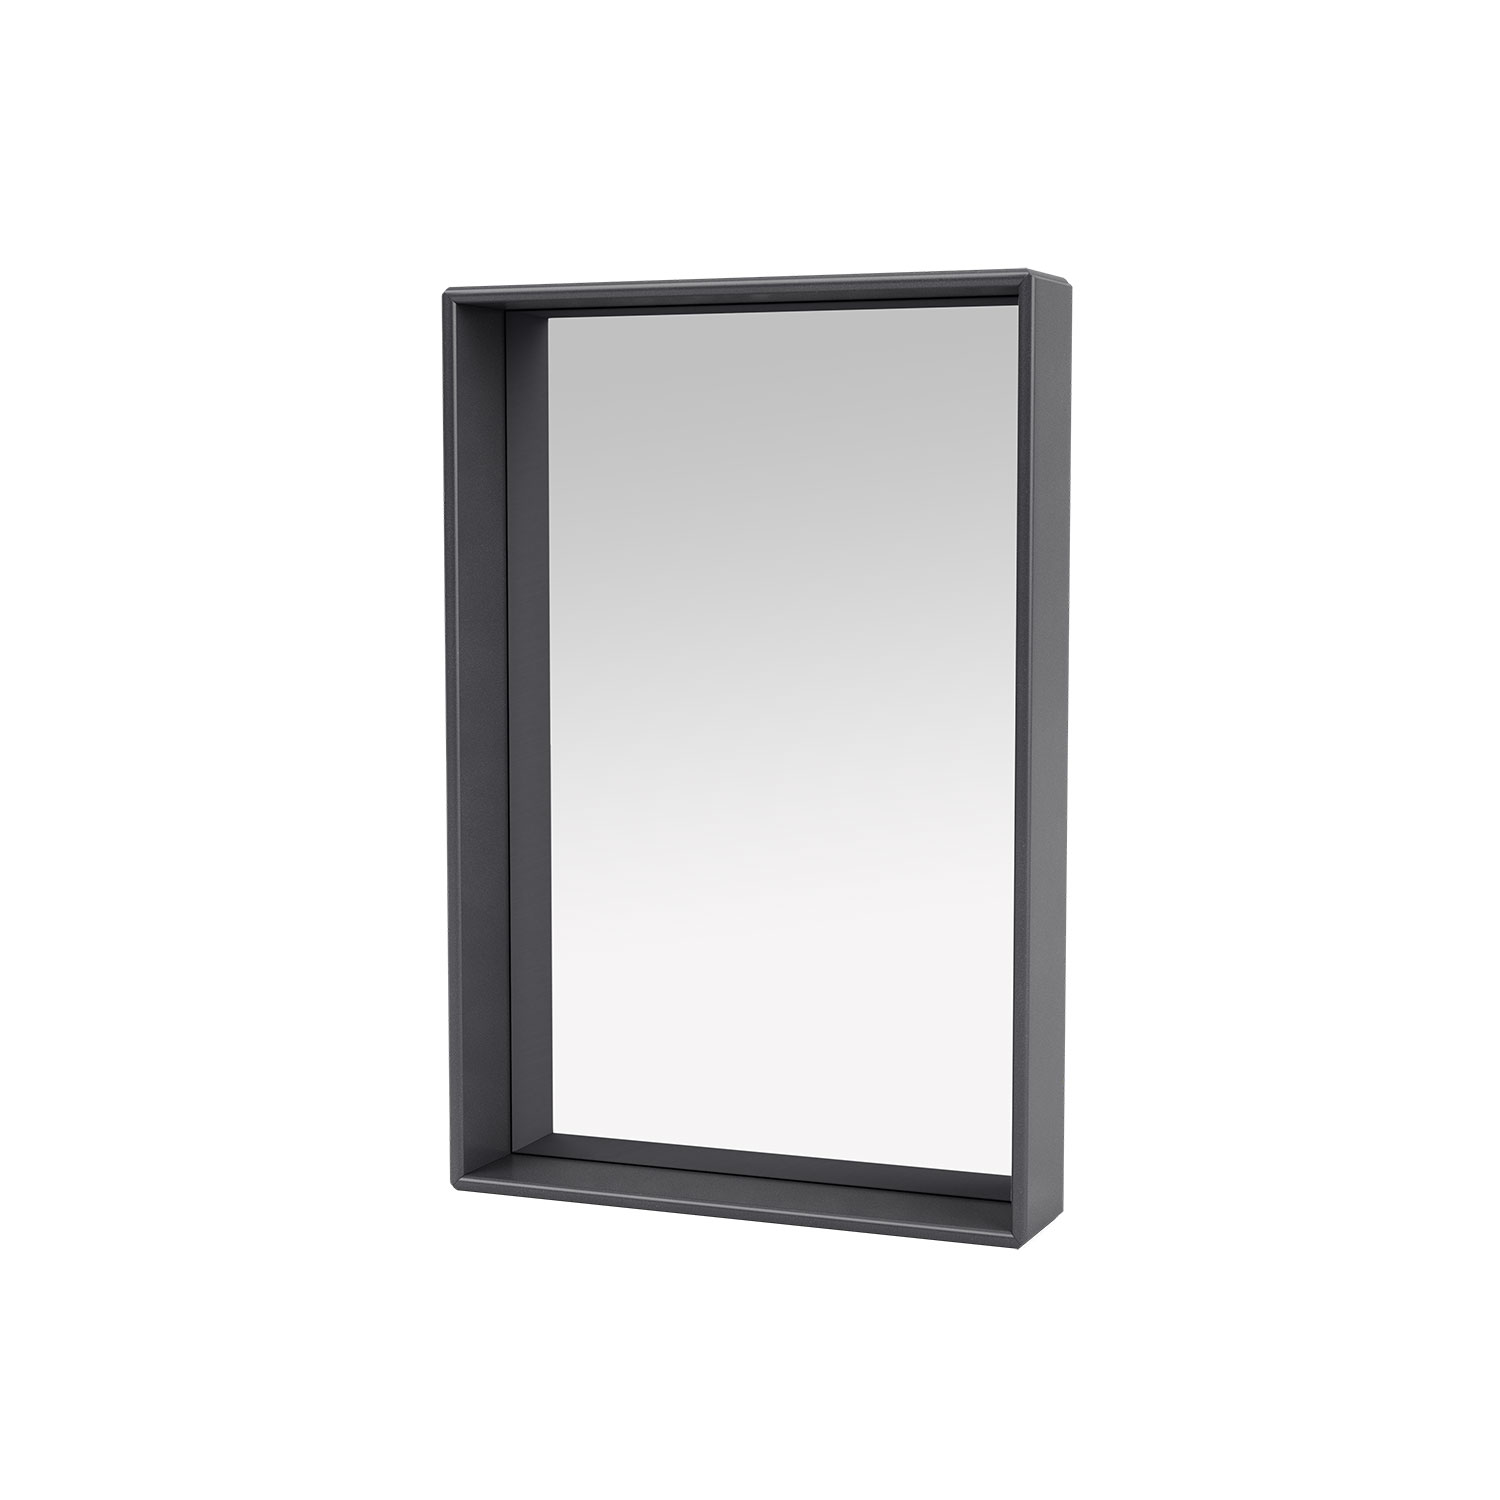 SHELFIE mirror with shelf, Coal